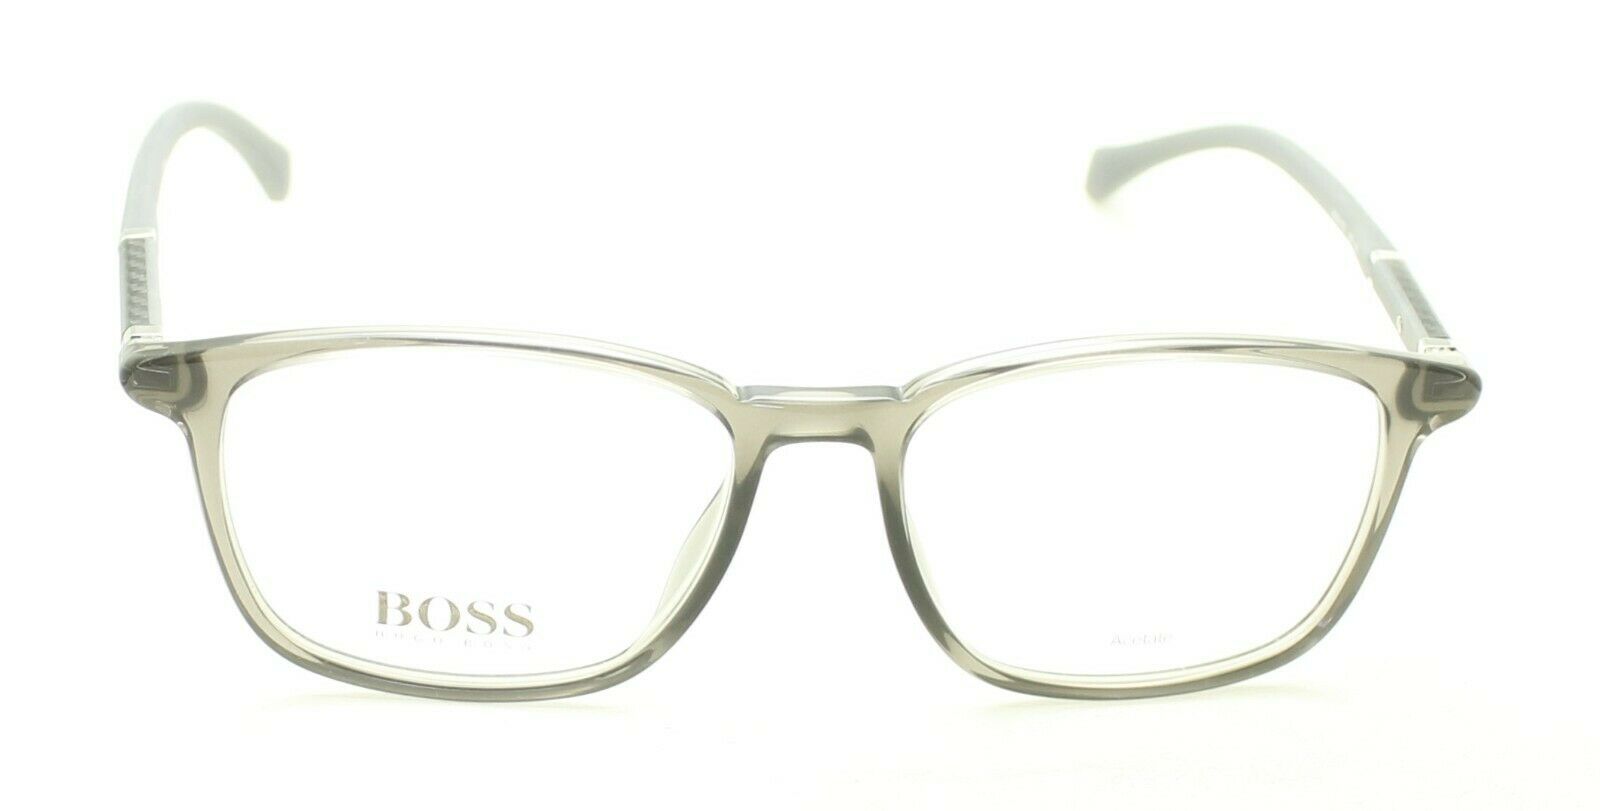 HUGO BOSS 1133 KB7 54mm Eyewear FRAMES Glasses RX Optical Eyeglasses New - Italy